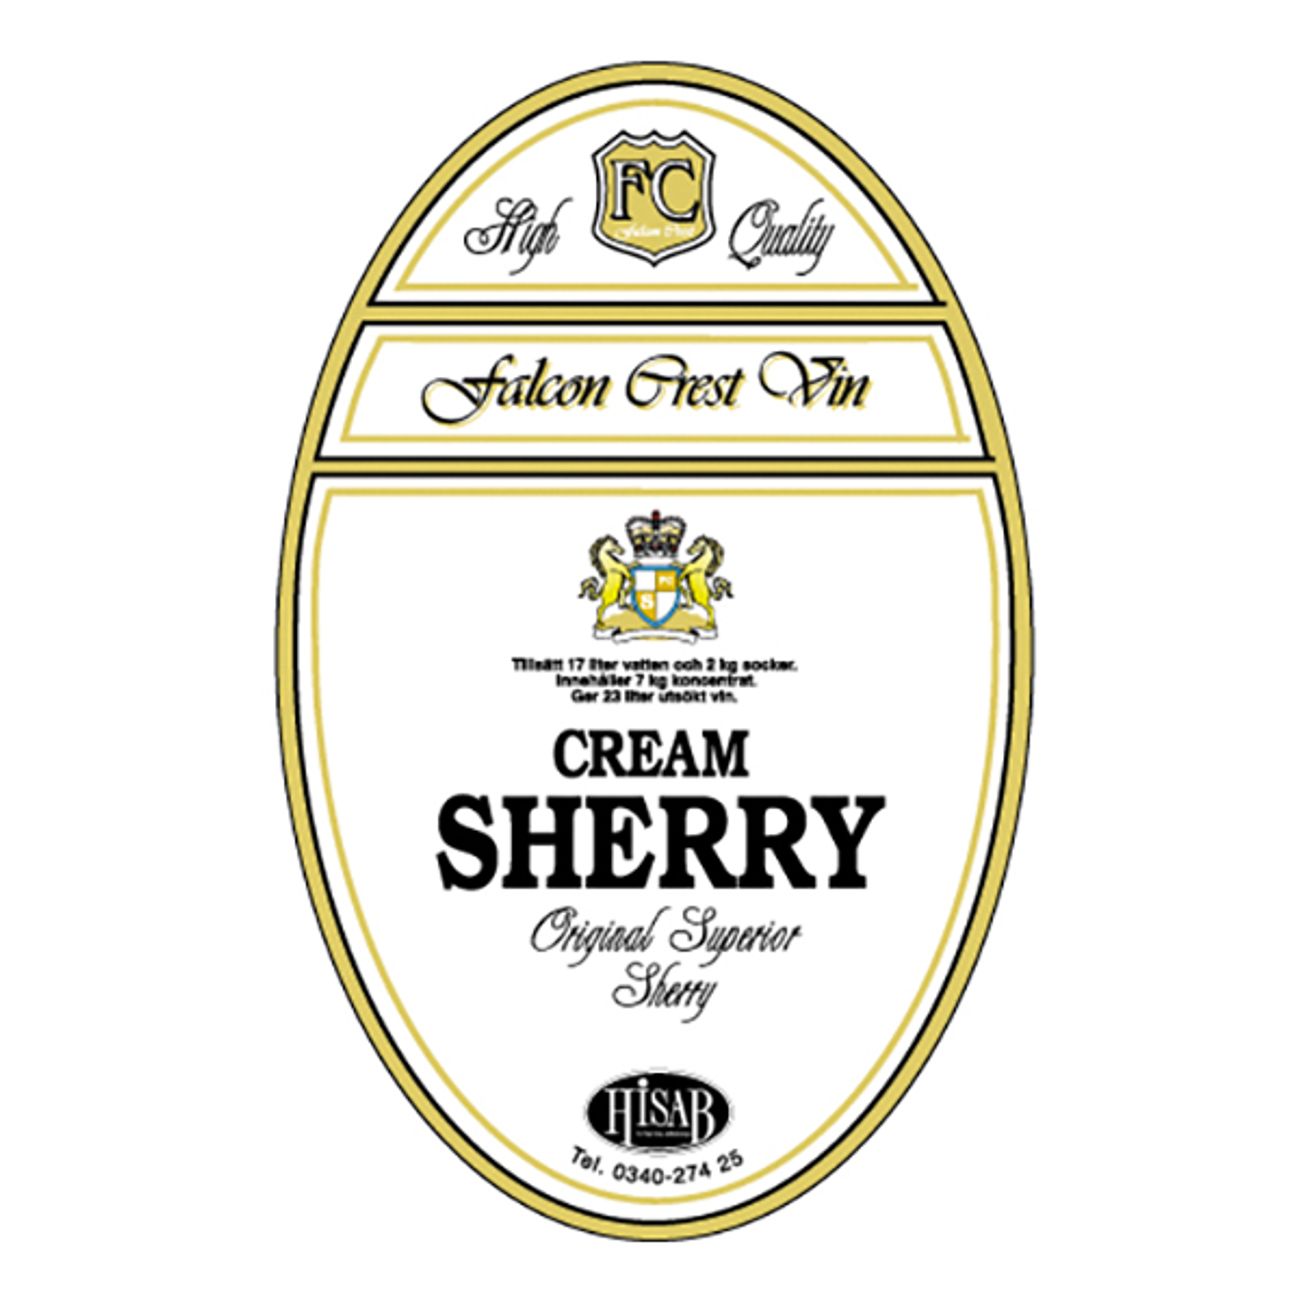 vinetiketter-sherry-73343-1